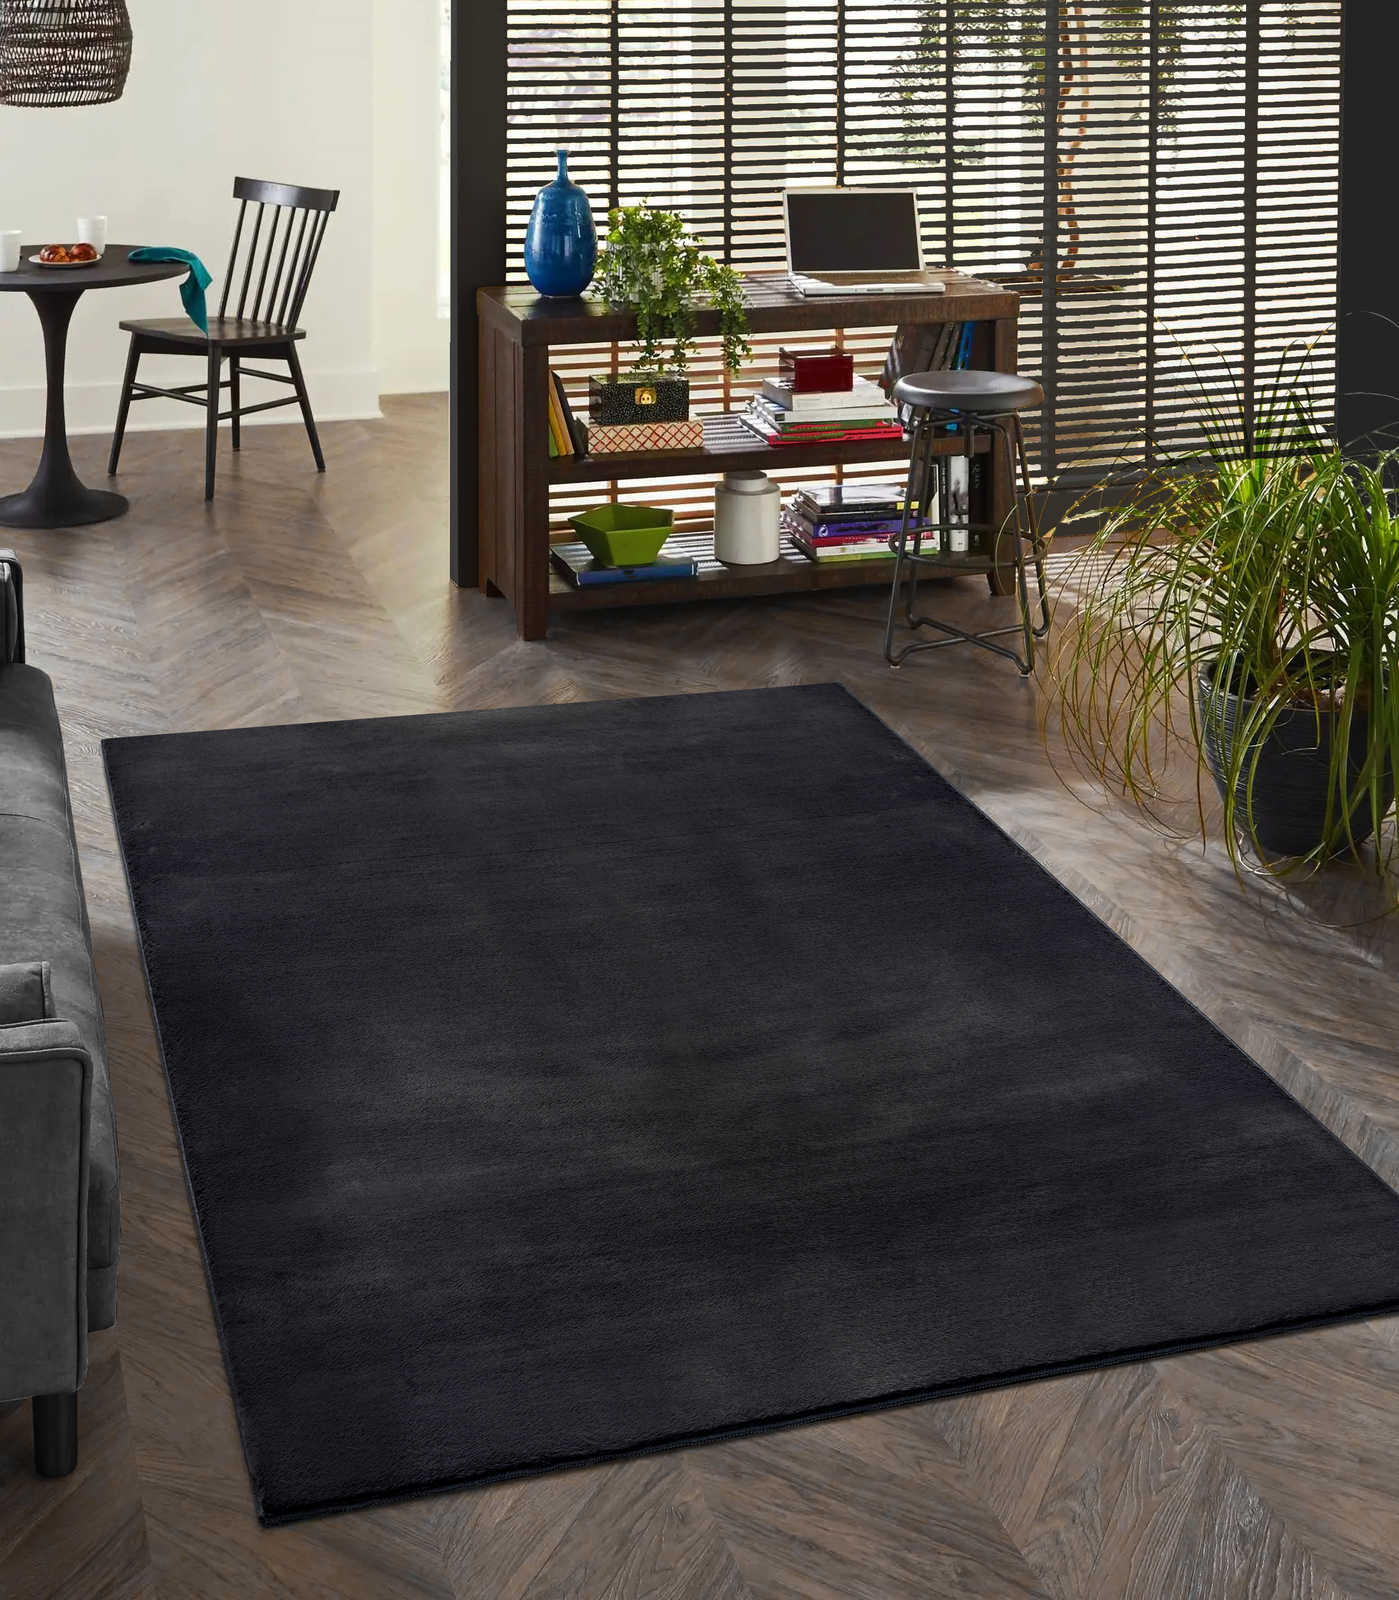 Cuddly soft high pile carpet in black - 100 x 50 cm
